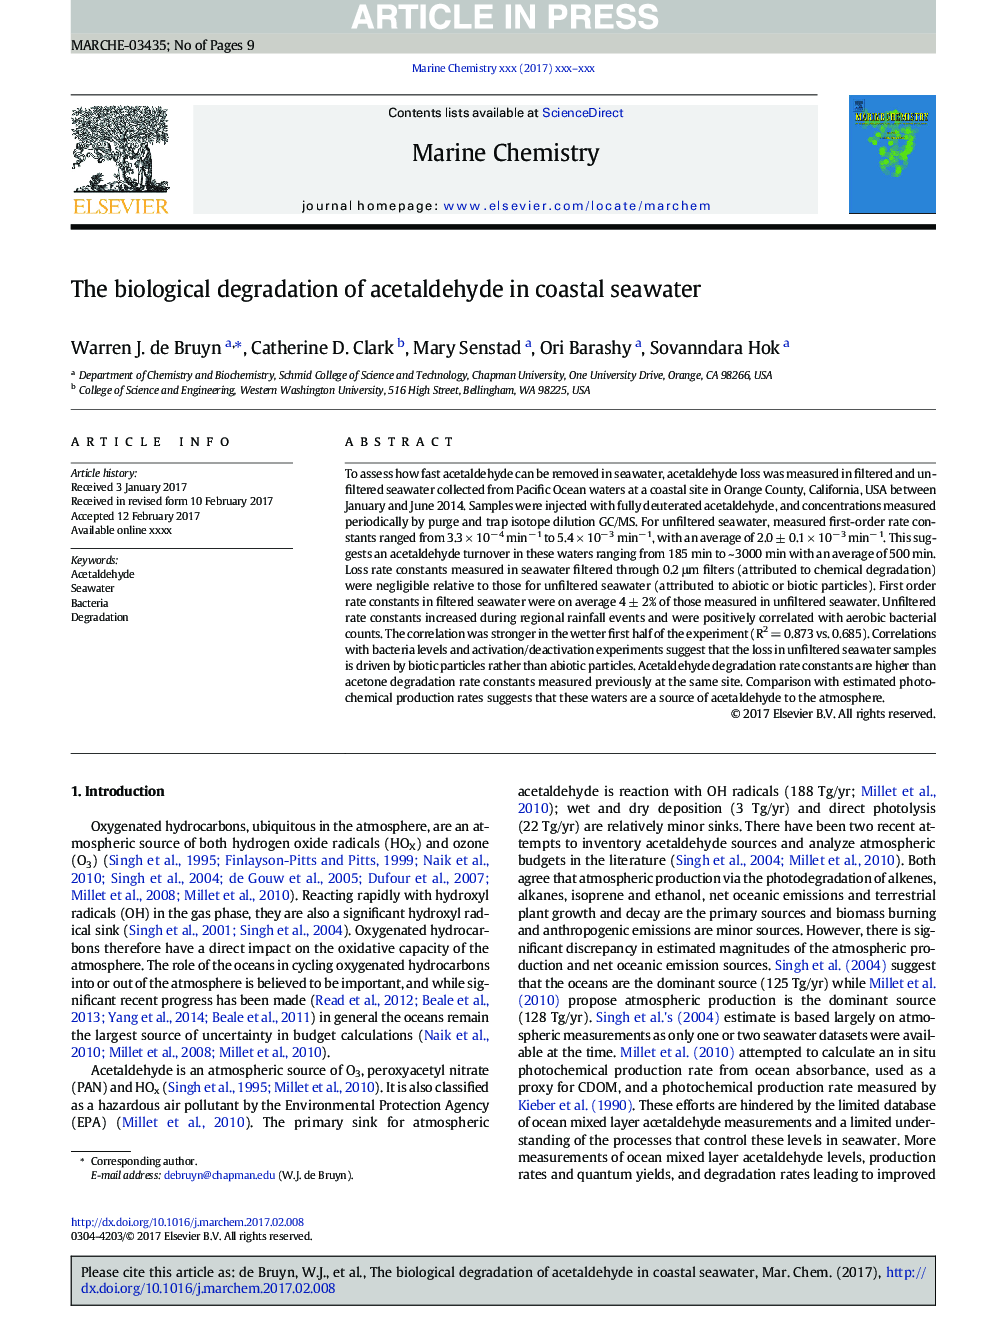 The biological degradation of acetaldehyde in coastal seawater